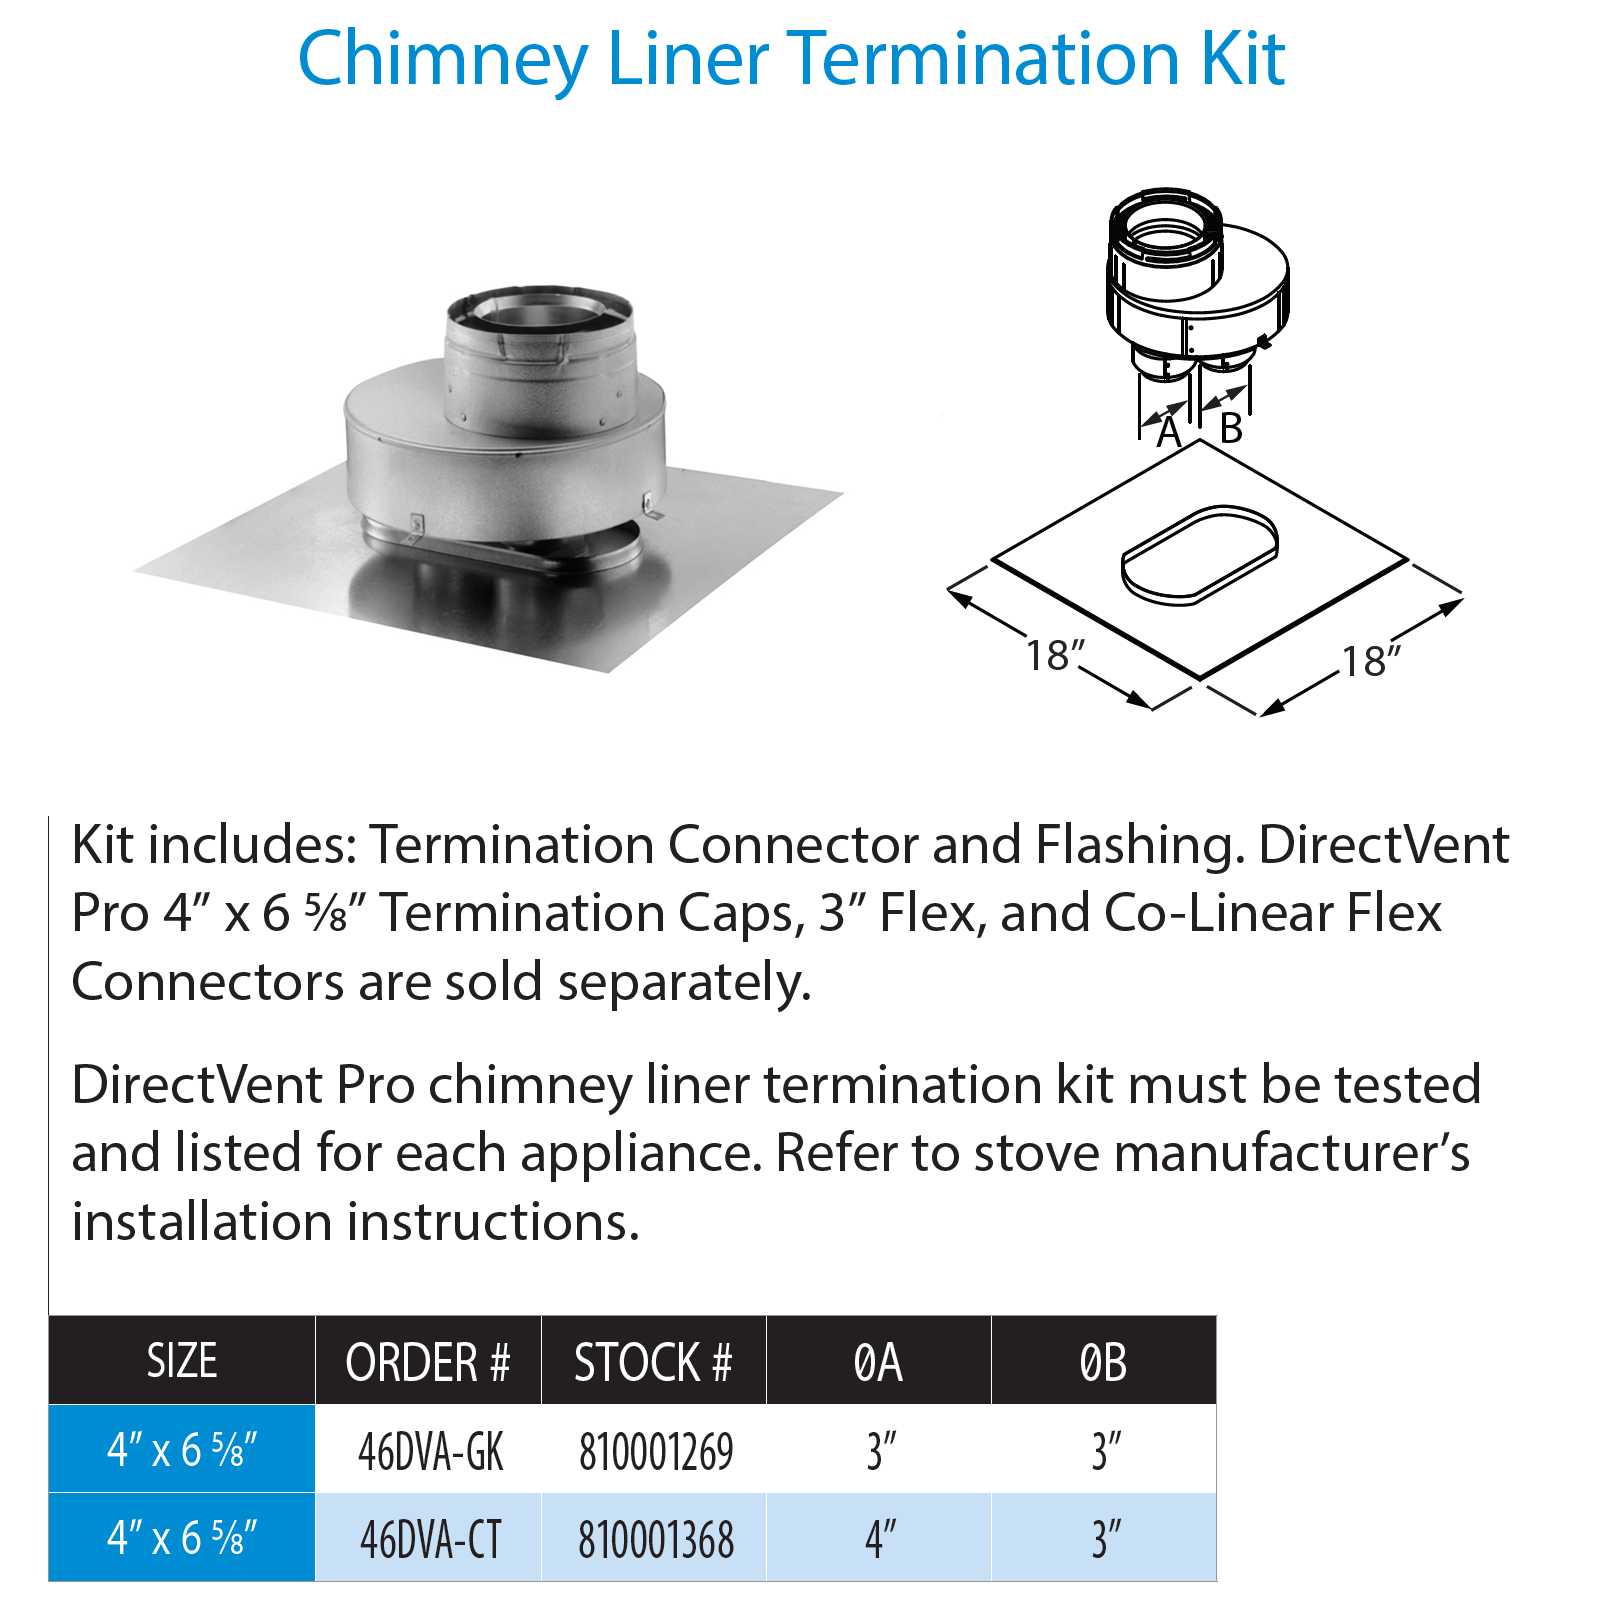 DuraVent DirectVent Pro Chimney Liner Termination Kit | 46DVA-GK